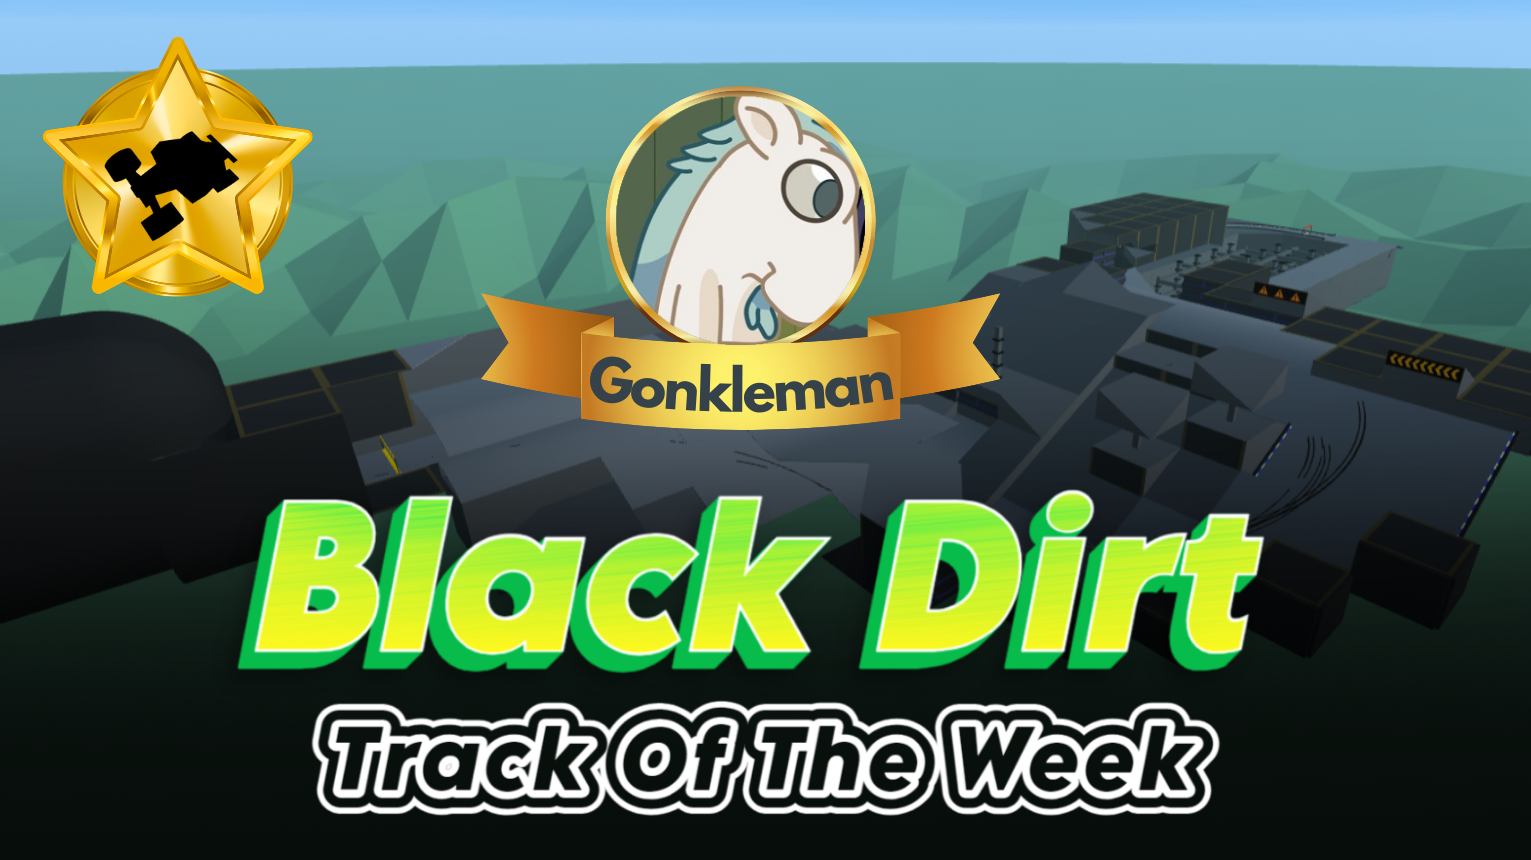 black dirt track of the week totw polytrack game